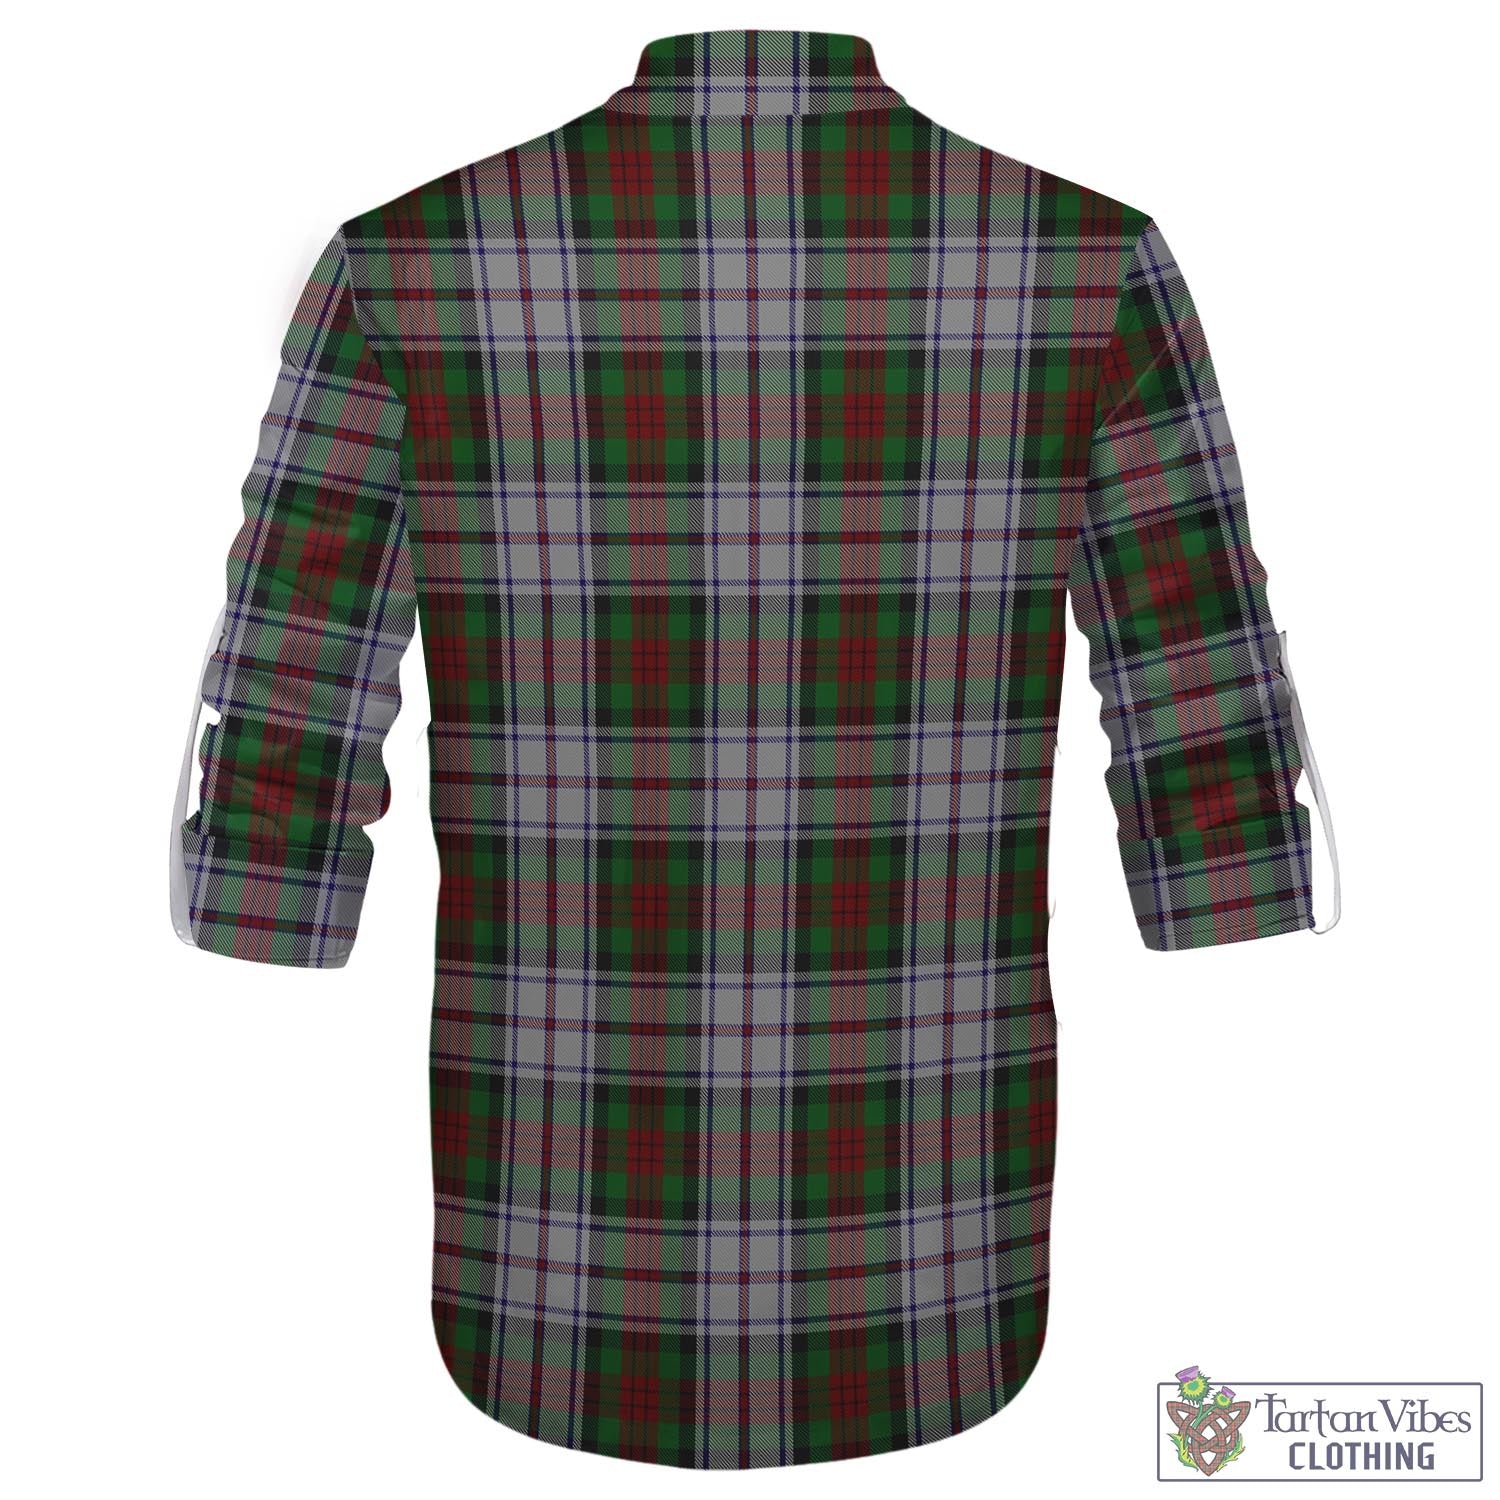 Tartan Vibes Clothing MacDuff Dress Tartan Men's Scottish Traditional Jacobite Ghillie Kilt Shirt with Family Crest